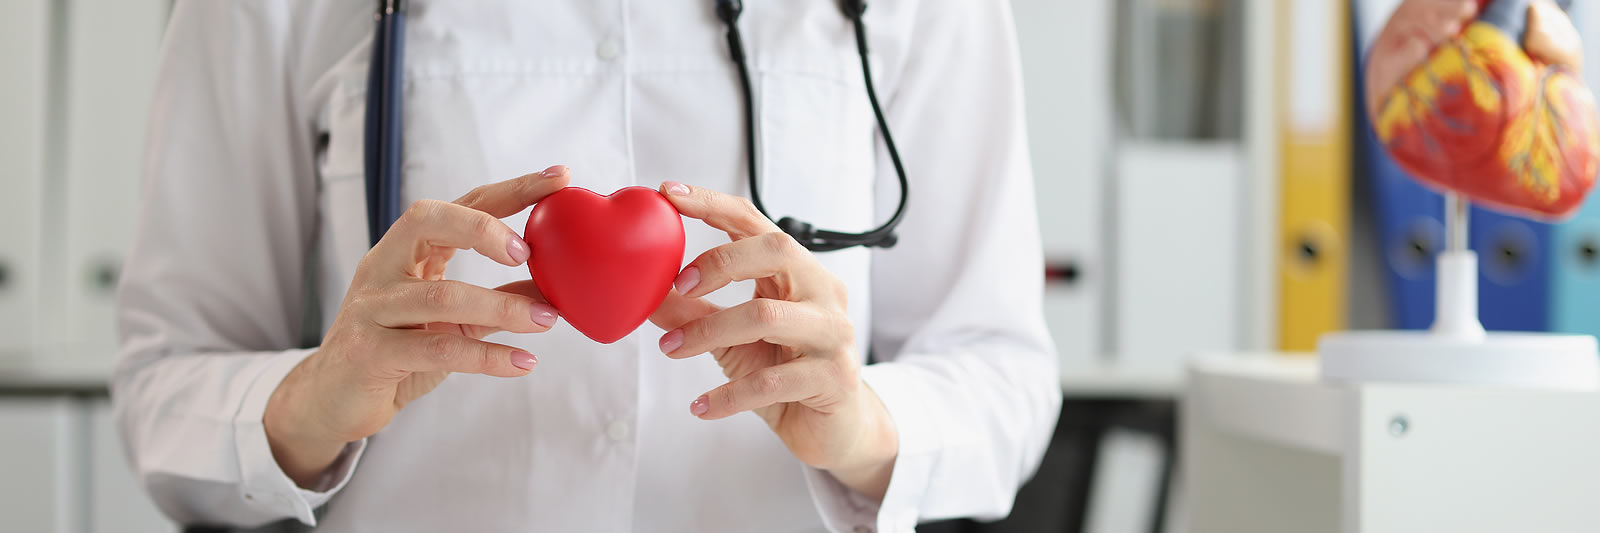 Treatment of Abnormal Heart Rhythms